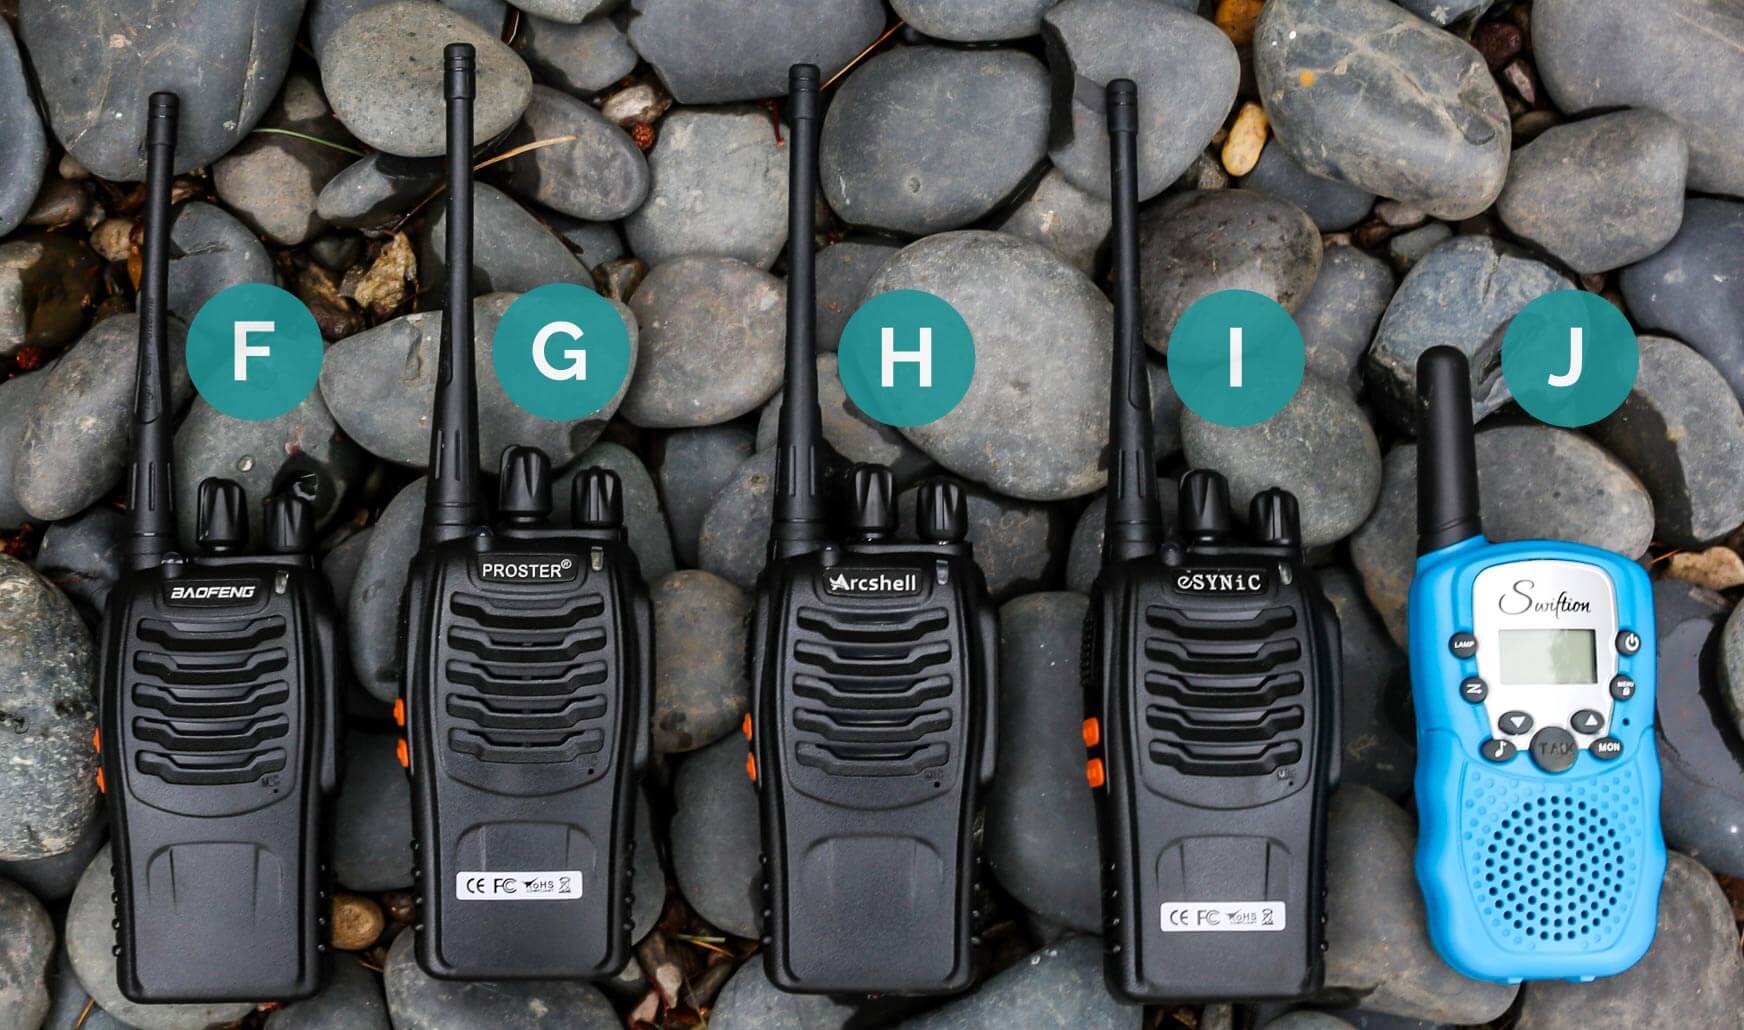 Eoncore Mini Walkie Talkies 16 Channels Long Range 3 Mile Two Way Radio with USB Port Earpieces 2pcs